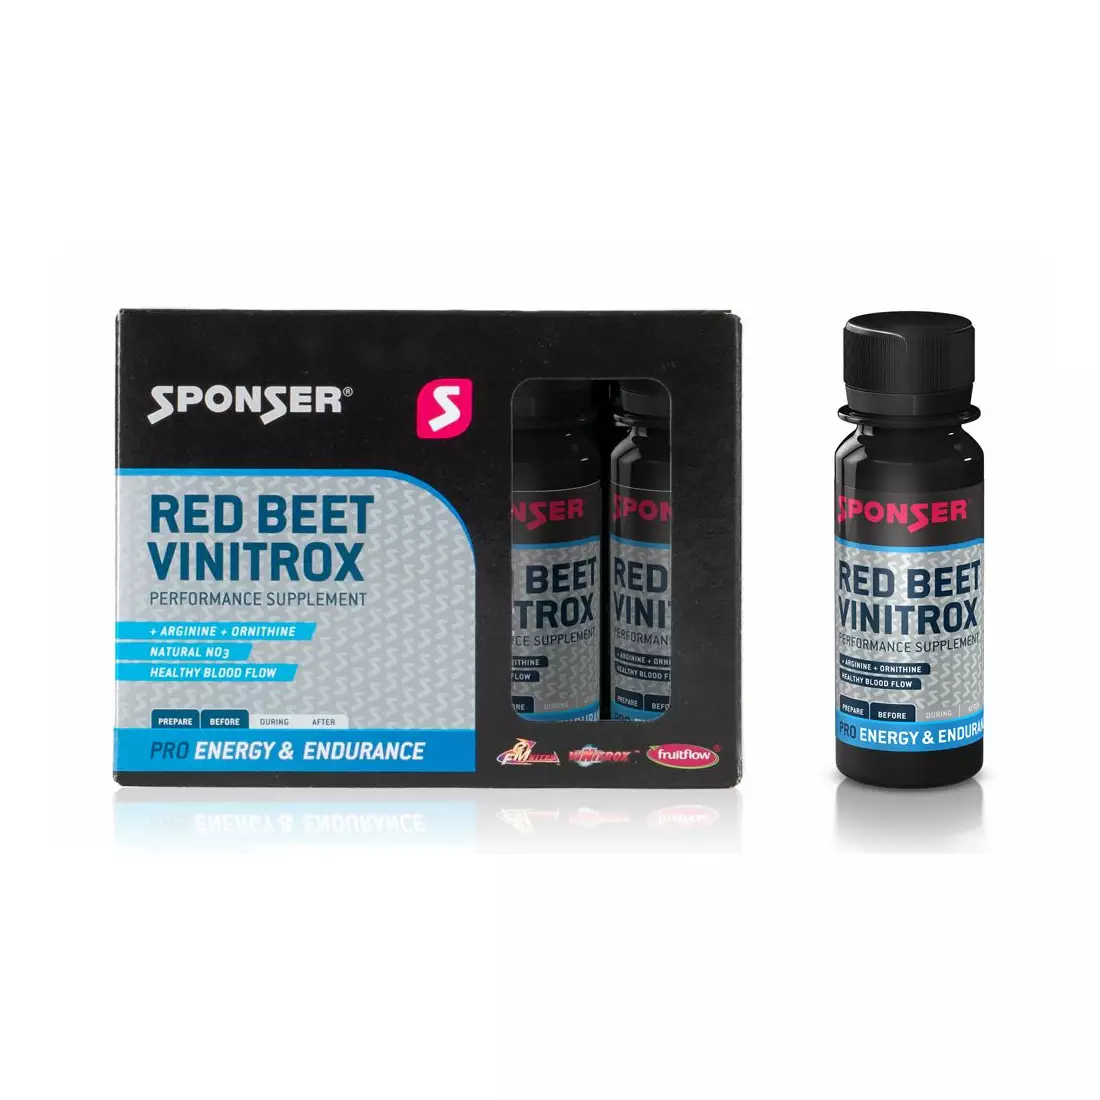 Supplement for maintaining proper platelet aggregation SPONSER RED BEET VINITROX (box of 4 x 60 ml bottles)